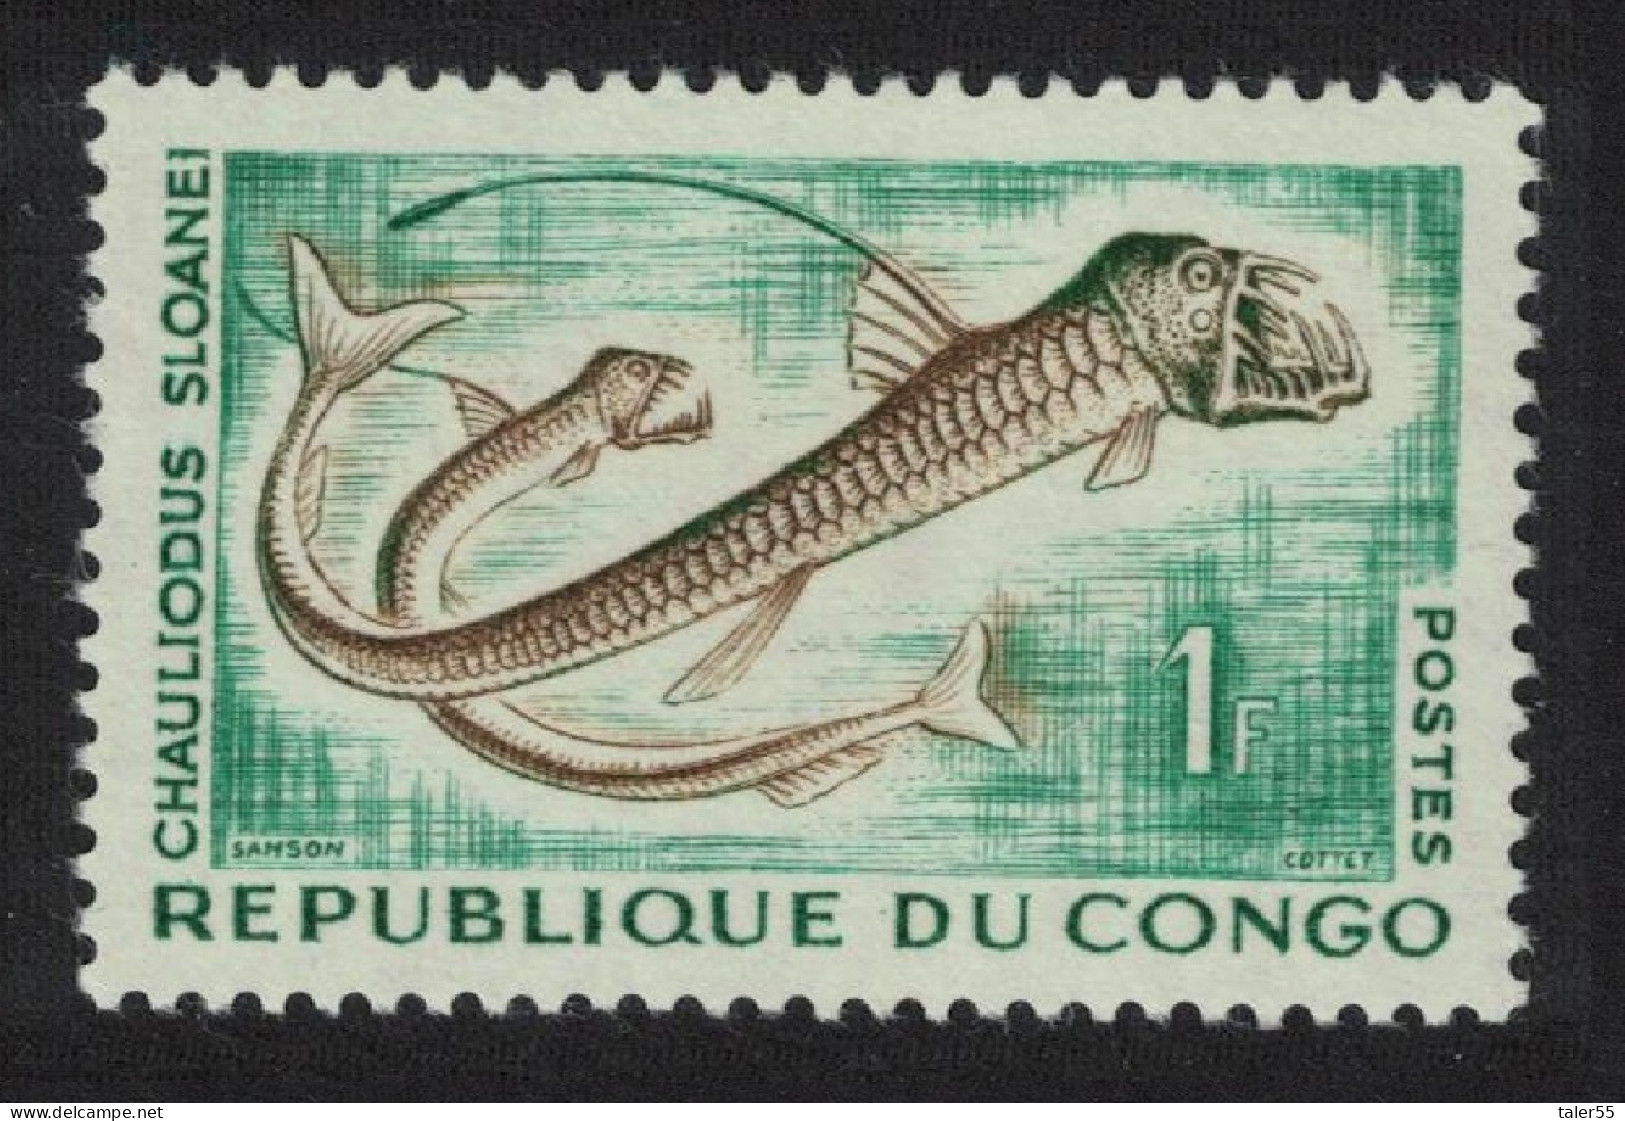 Congo Fish Sloan's Viperfish 'Hauliodus Sloanei' 1f 1961 MNH SG#14 - Mint/hinged